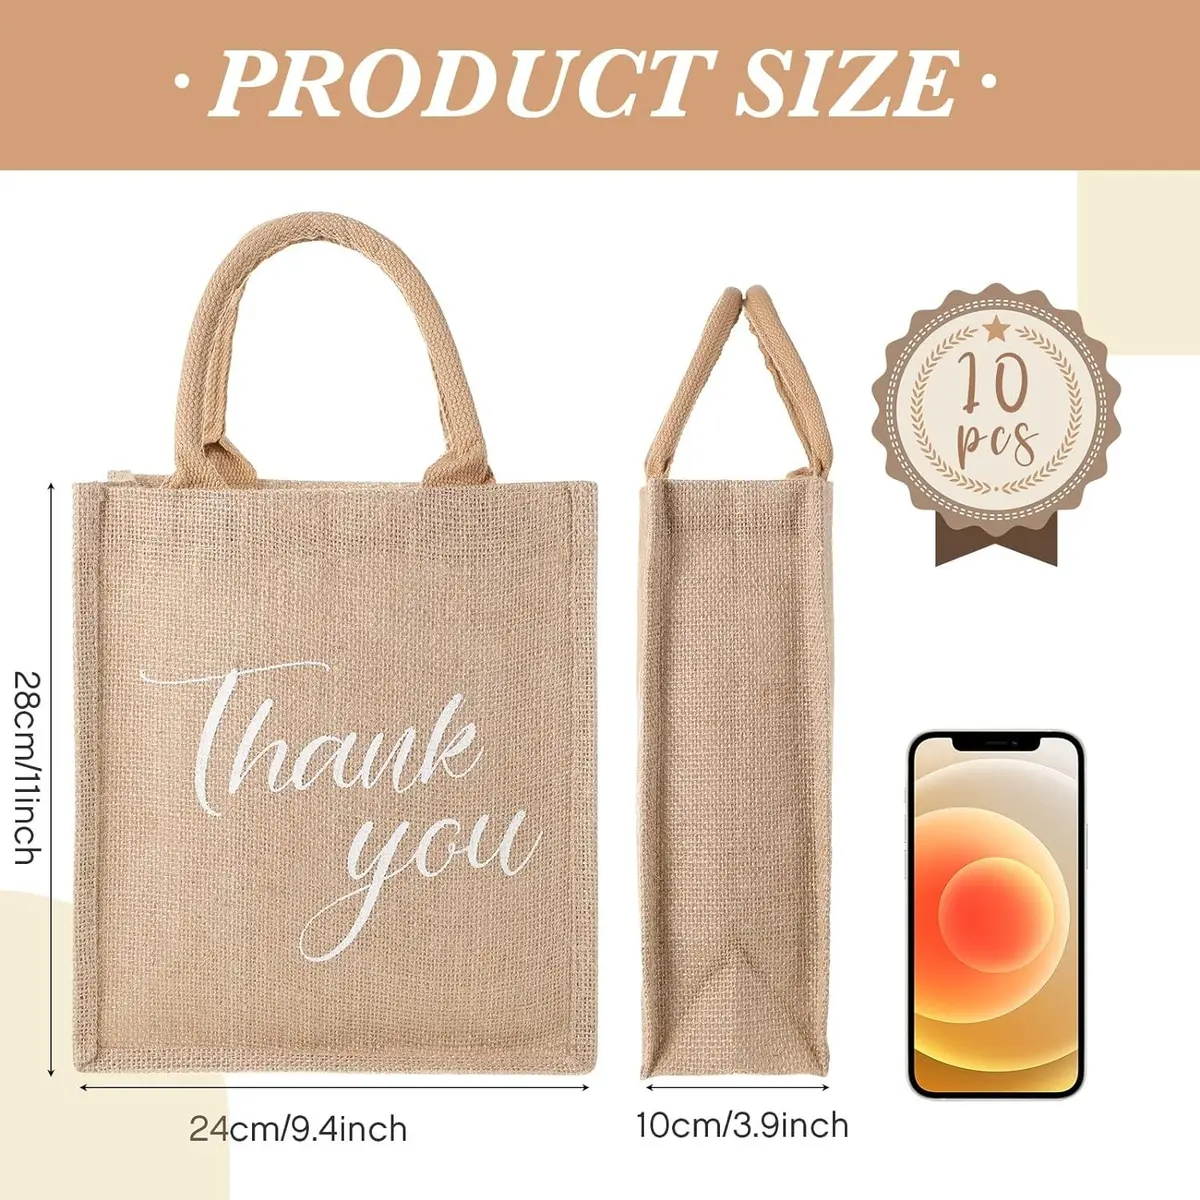 Sweetude 10 Pcs Thank You Gift Bags Jute Tote Bag Reusable Burlap